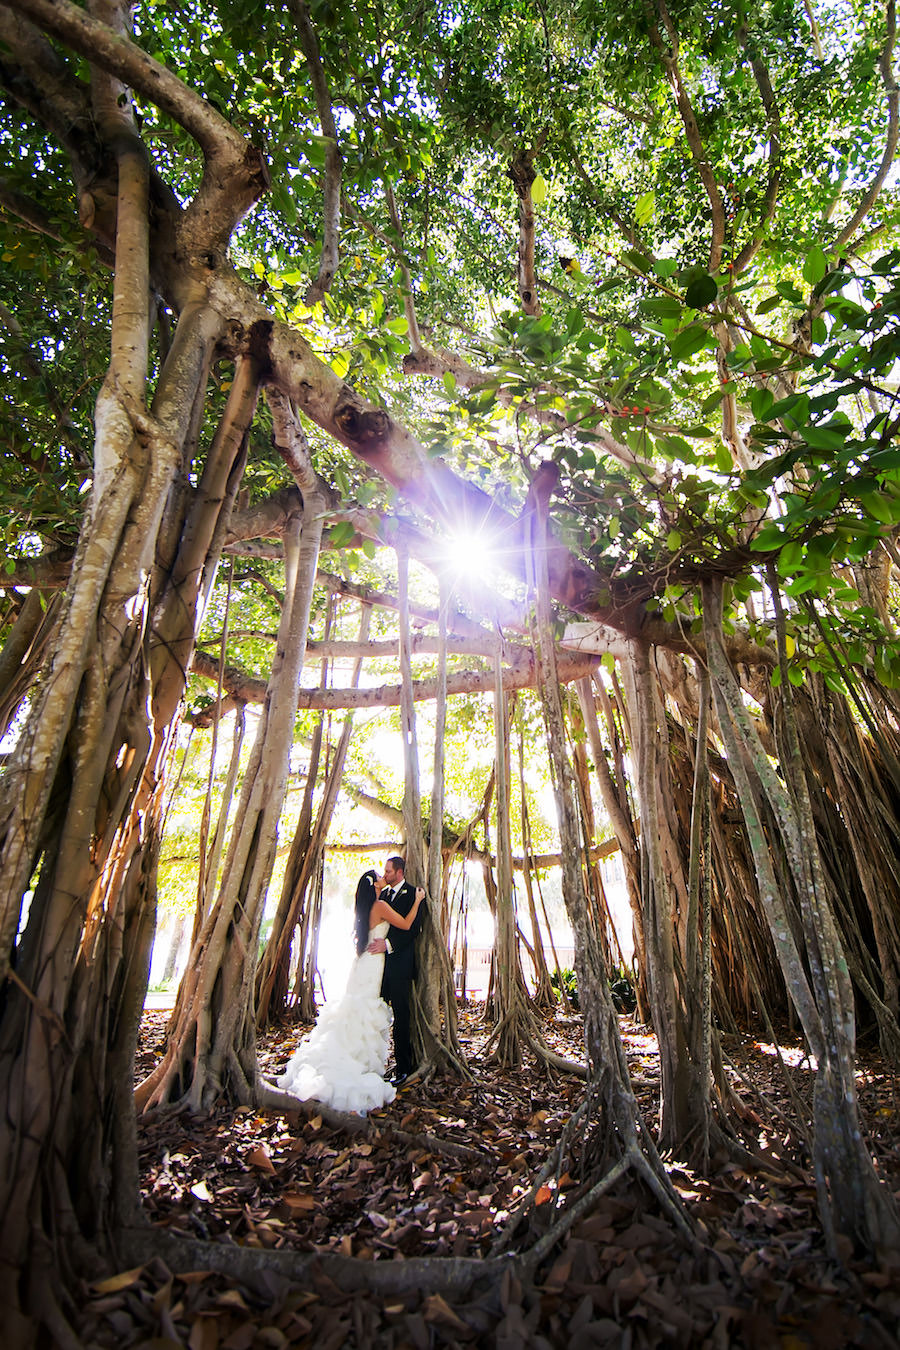 Outdoor Bride and Groom Wedding Portrait in Banyan Trees | Bride in Maggie Sottero Dress | Sarasota Wedding Venue Ca' d'zan Ringling Mansion | Sarasota Wedding Photography Limelight Photography